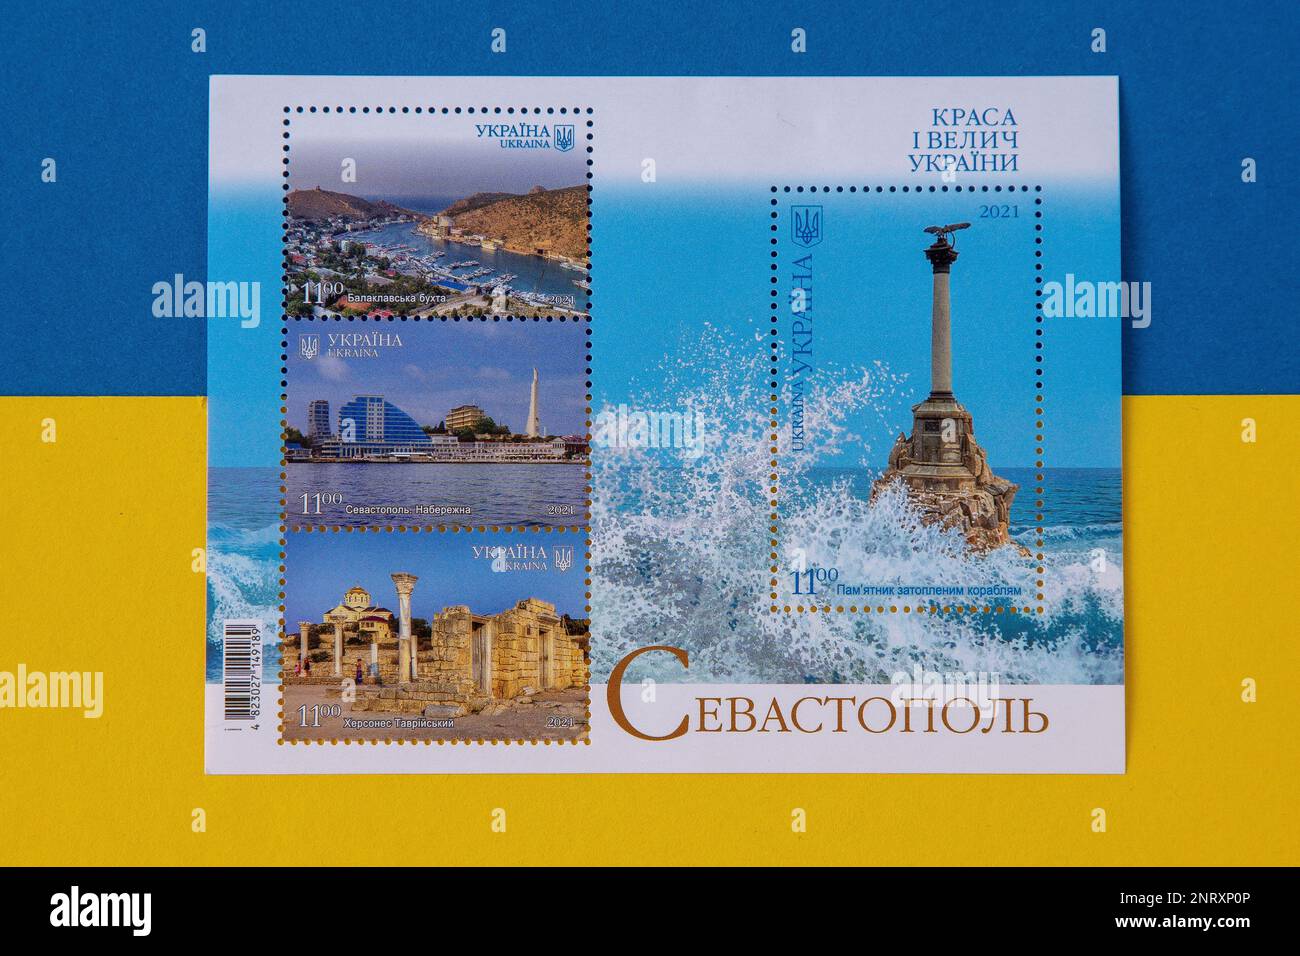 Sevastopol. Monument to the Scuttled Ships. Crimea. Postage stamps of Ukraine. Ukrainian postage stamp. Ukrposhta limited edition print. Kyiv, Ukraine - February 24, 2023 Stock Photo